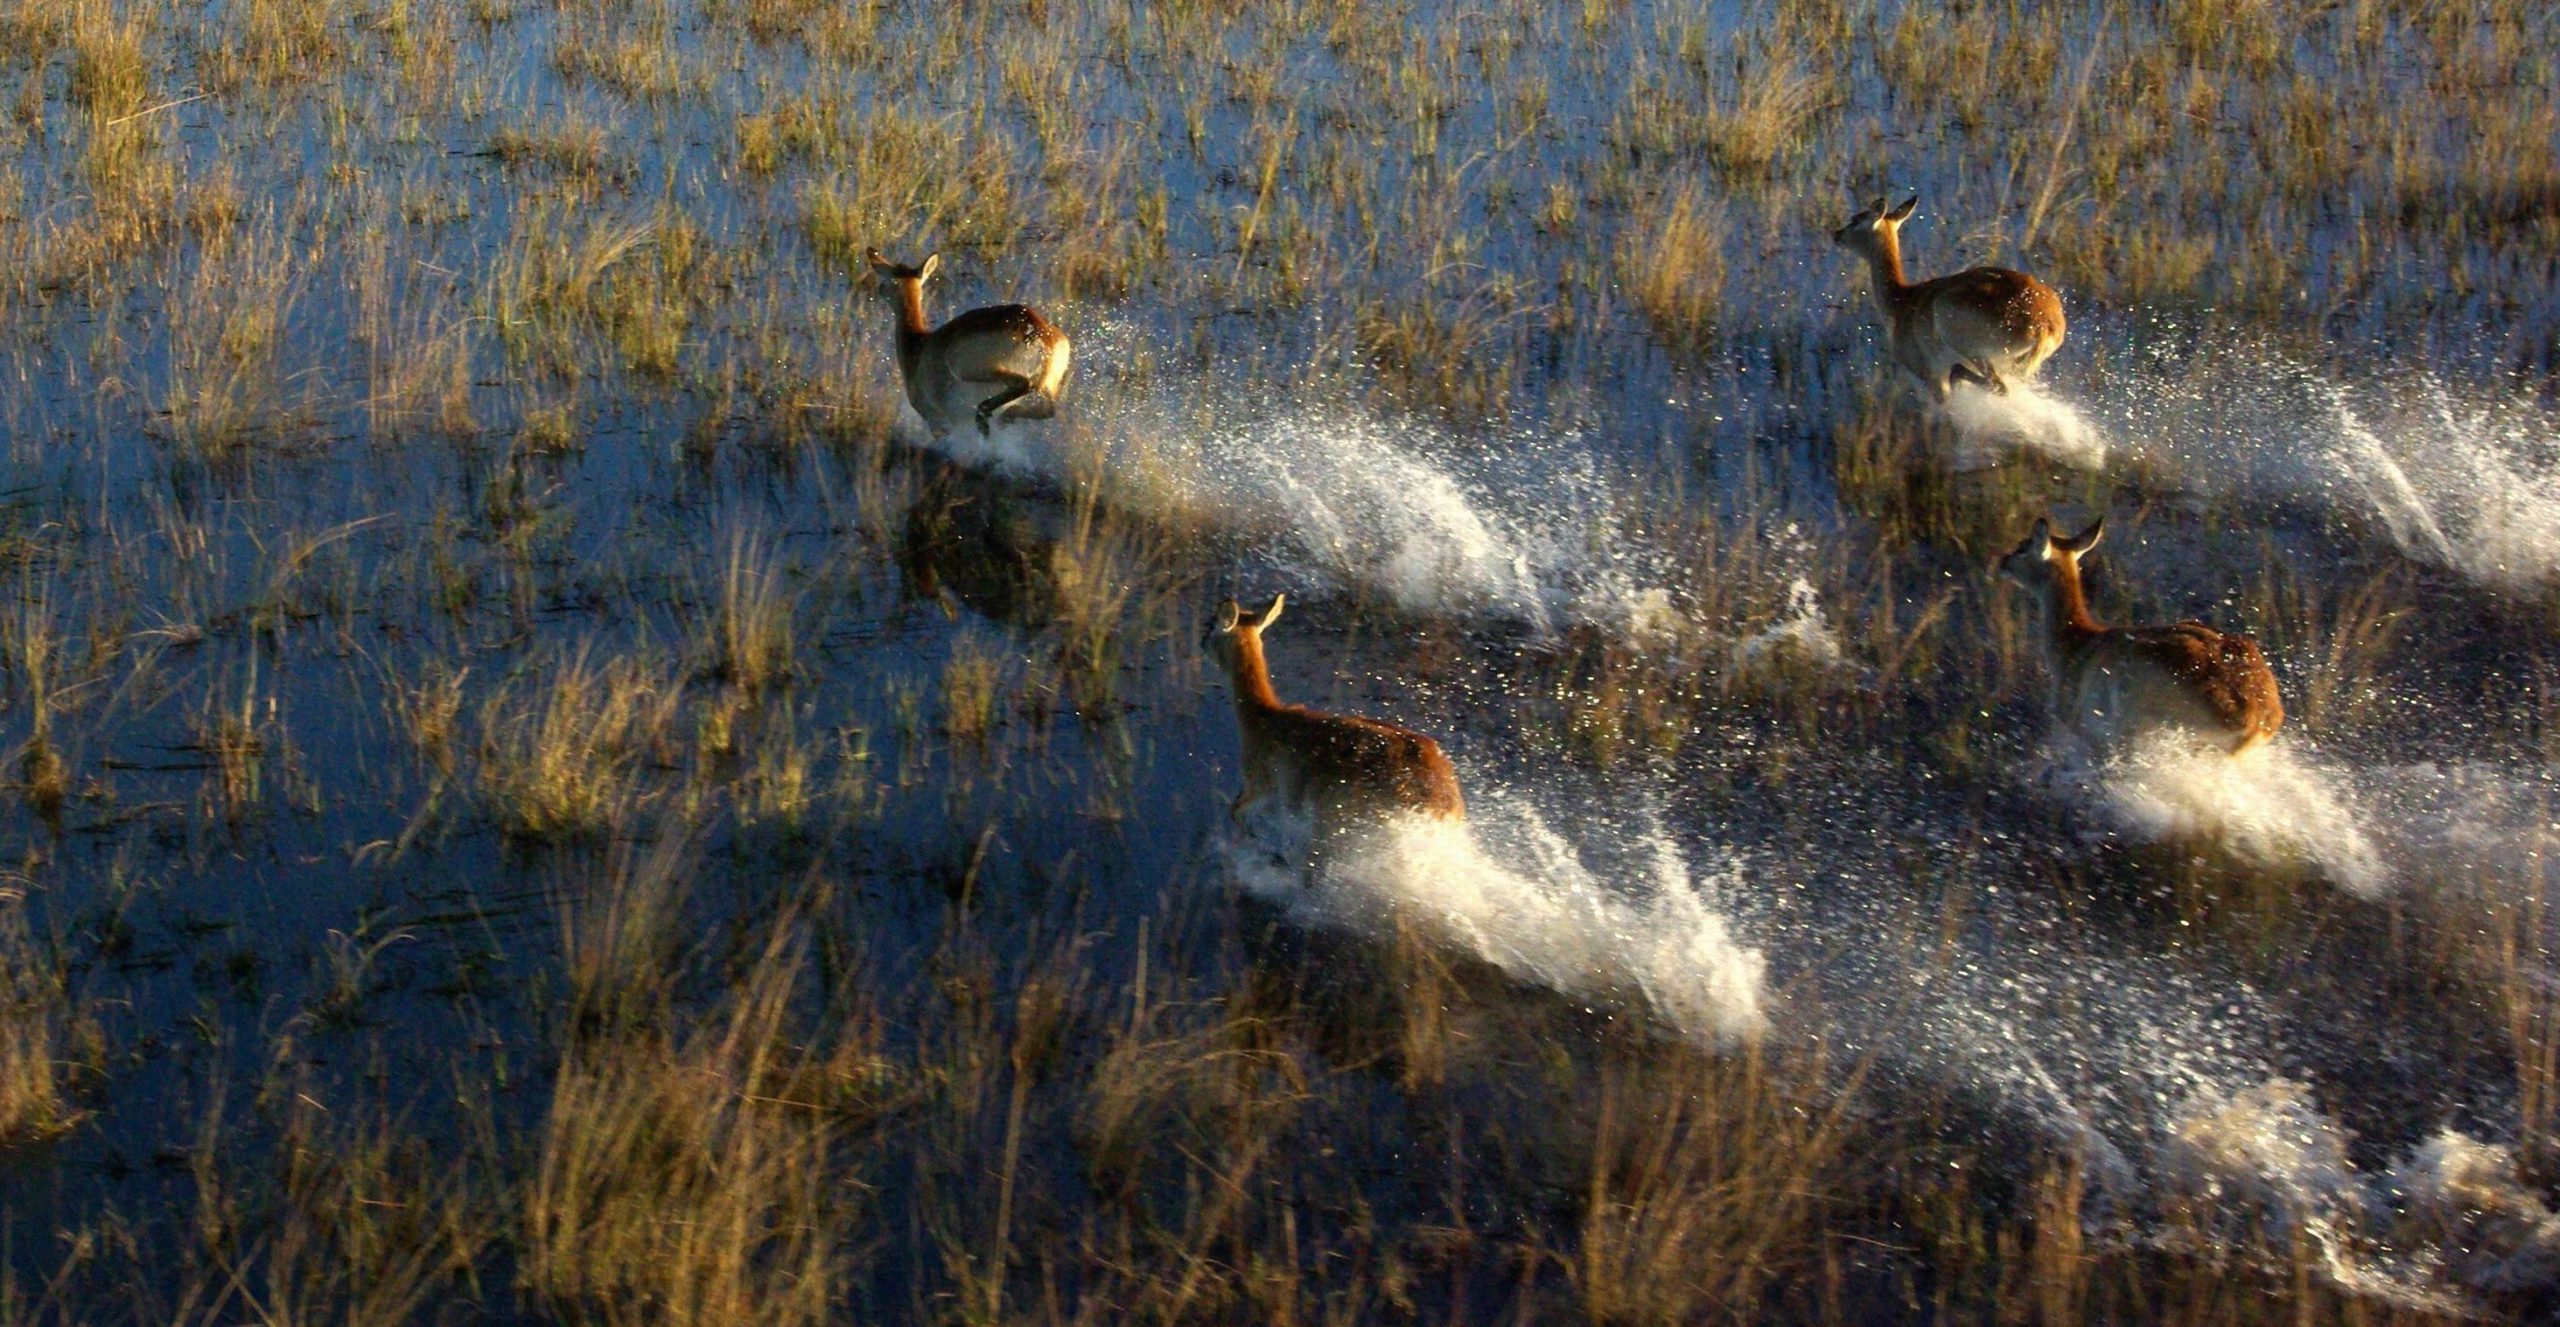 Red Lechwes, Okavango Delta, Botswana